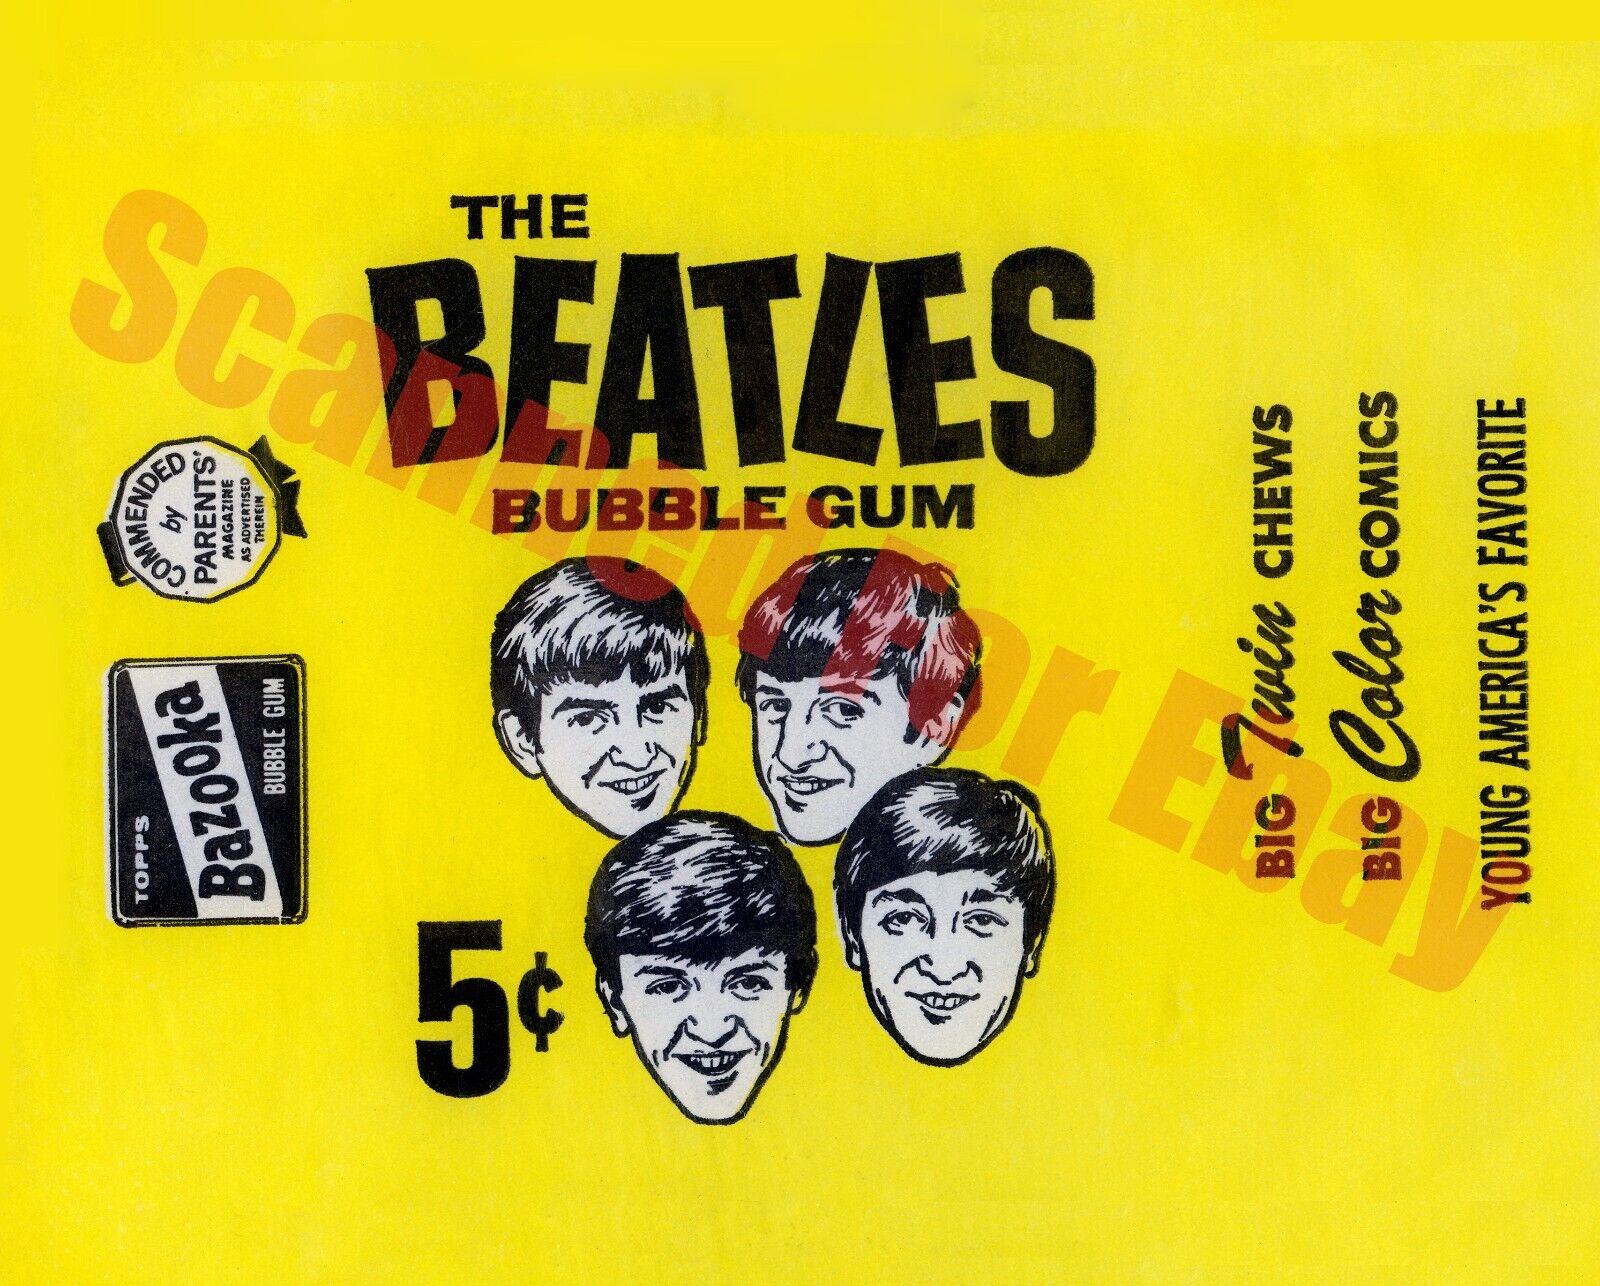 1964 TOPPS THE BEATLES Lennon McCartney Card Gum Wax Pack Wrapper 8x10 Photo